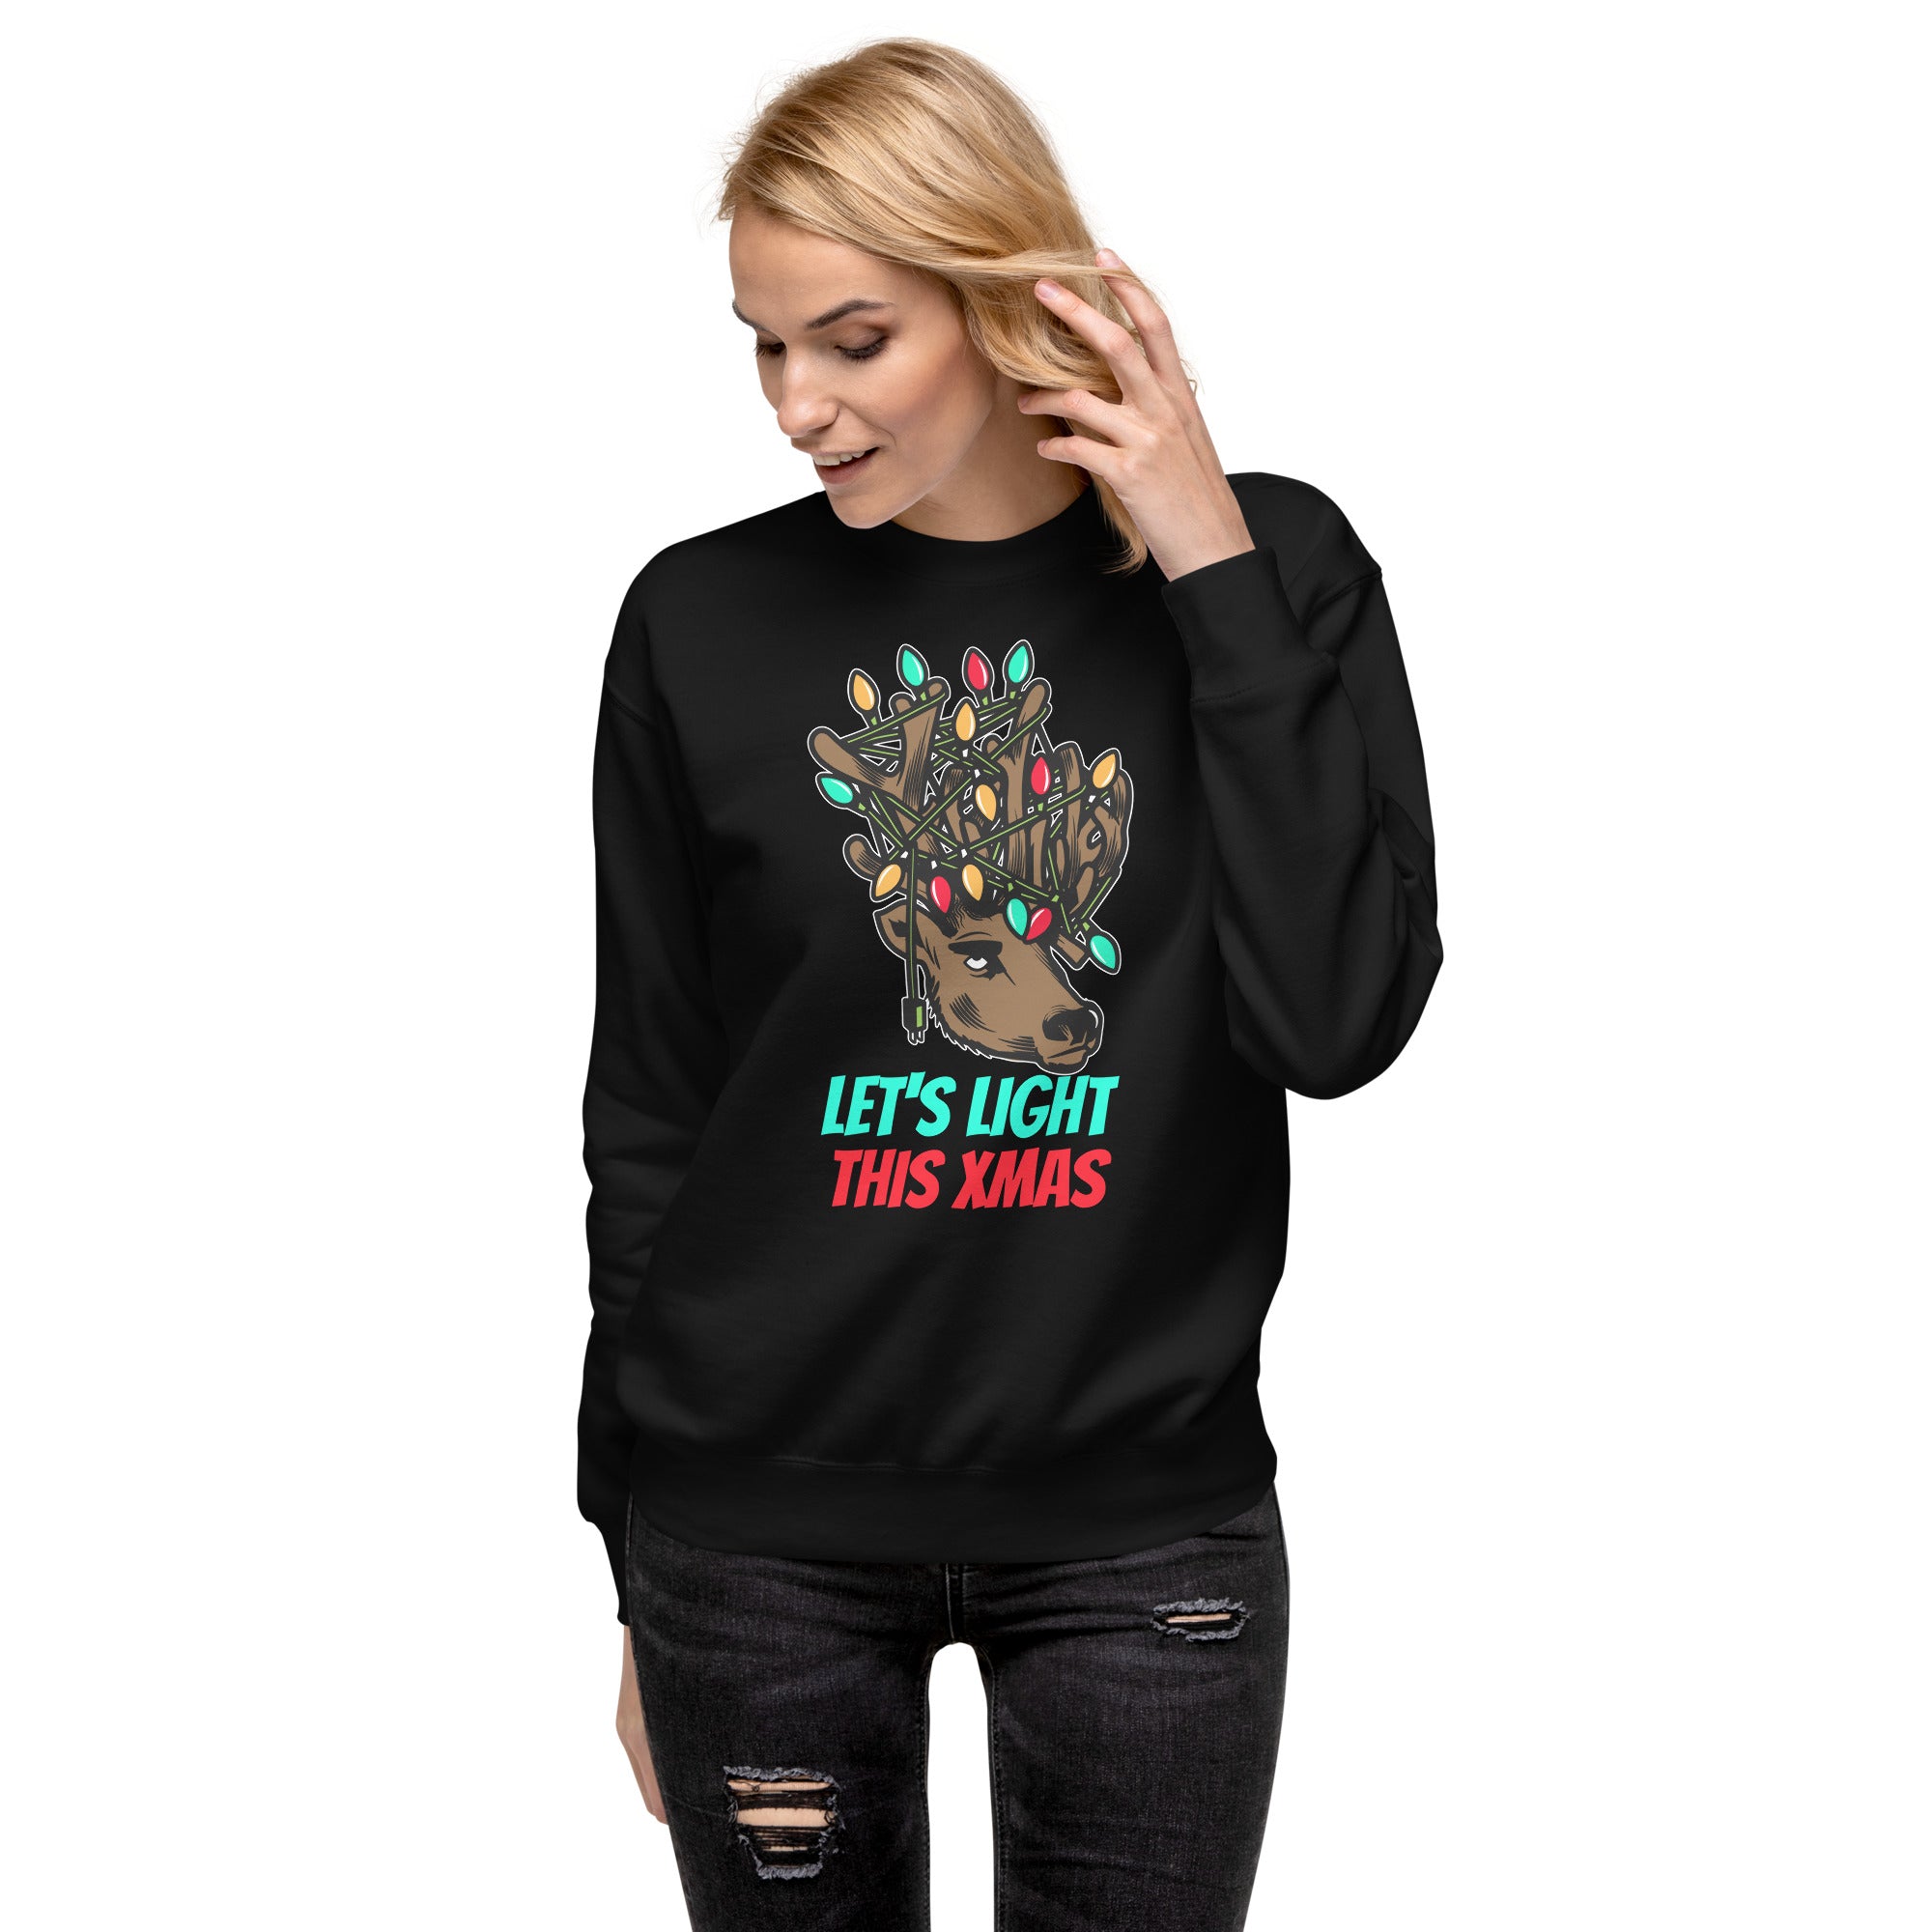 Women's graphic Sweatshirt